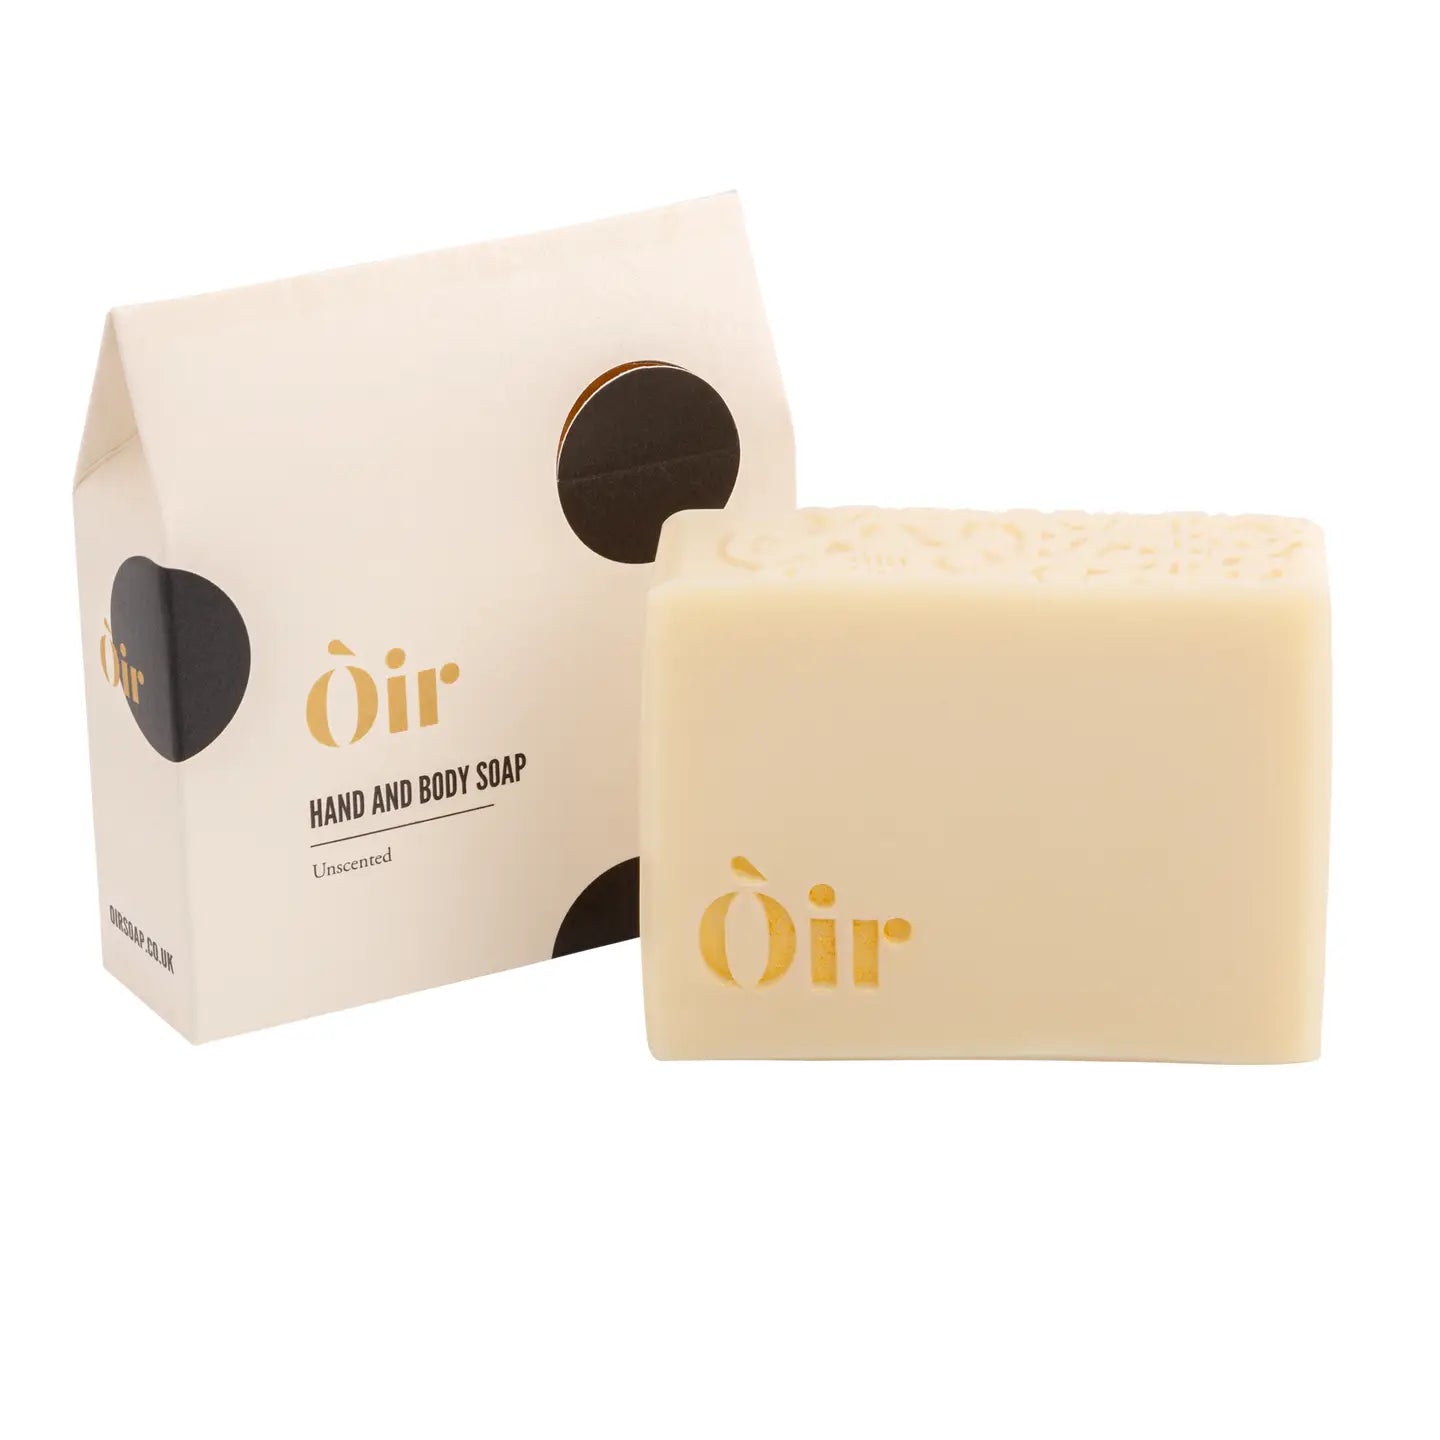 Fragrance free soap